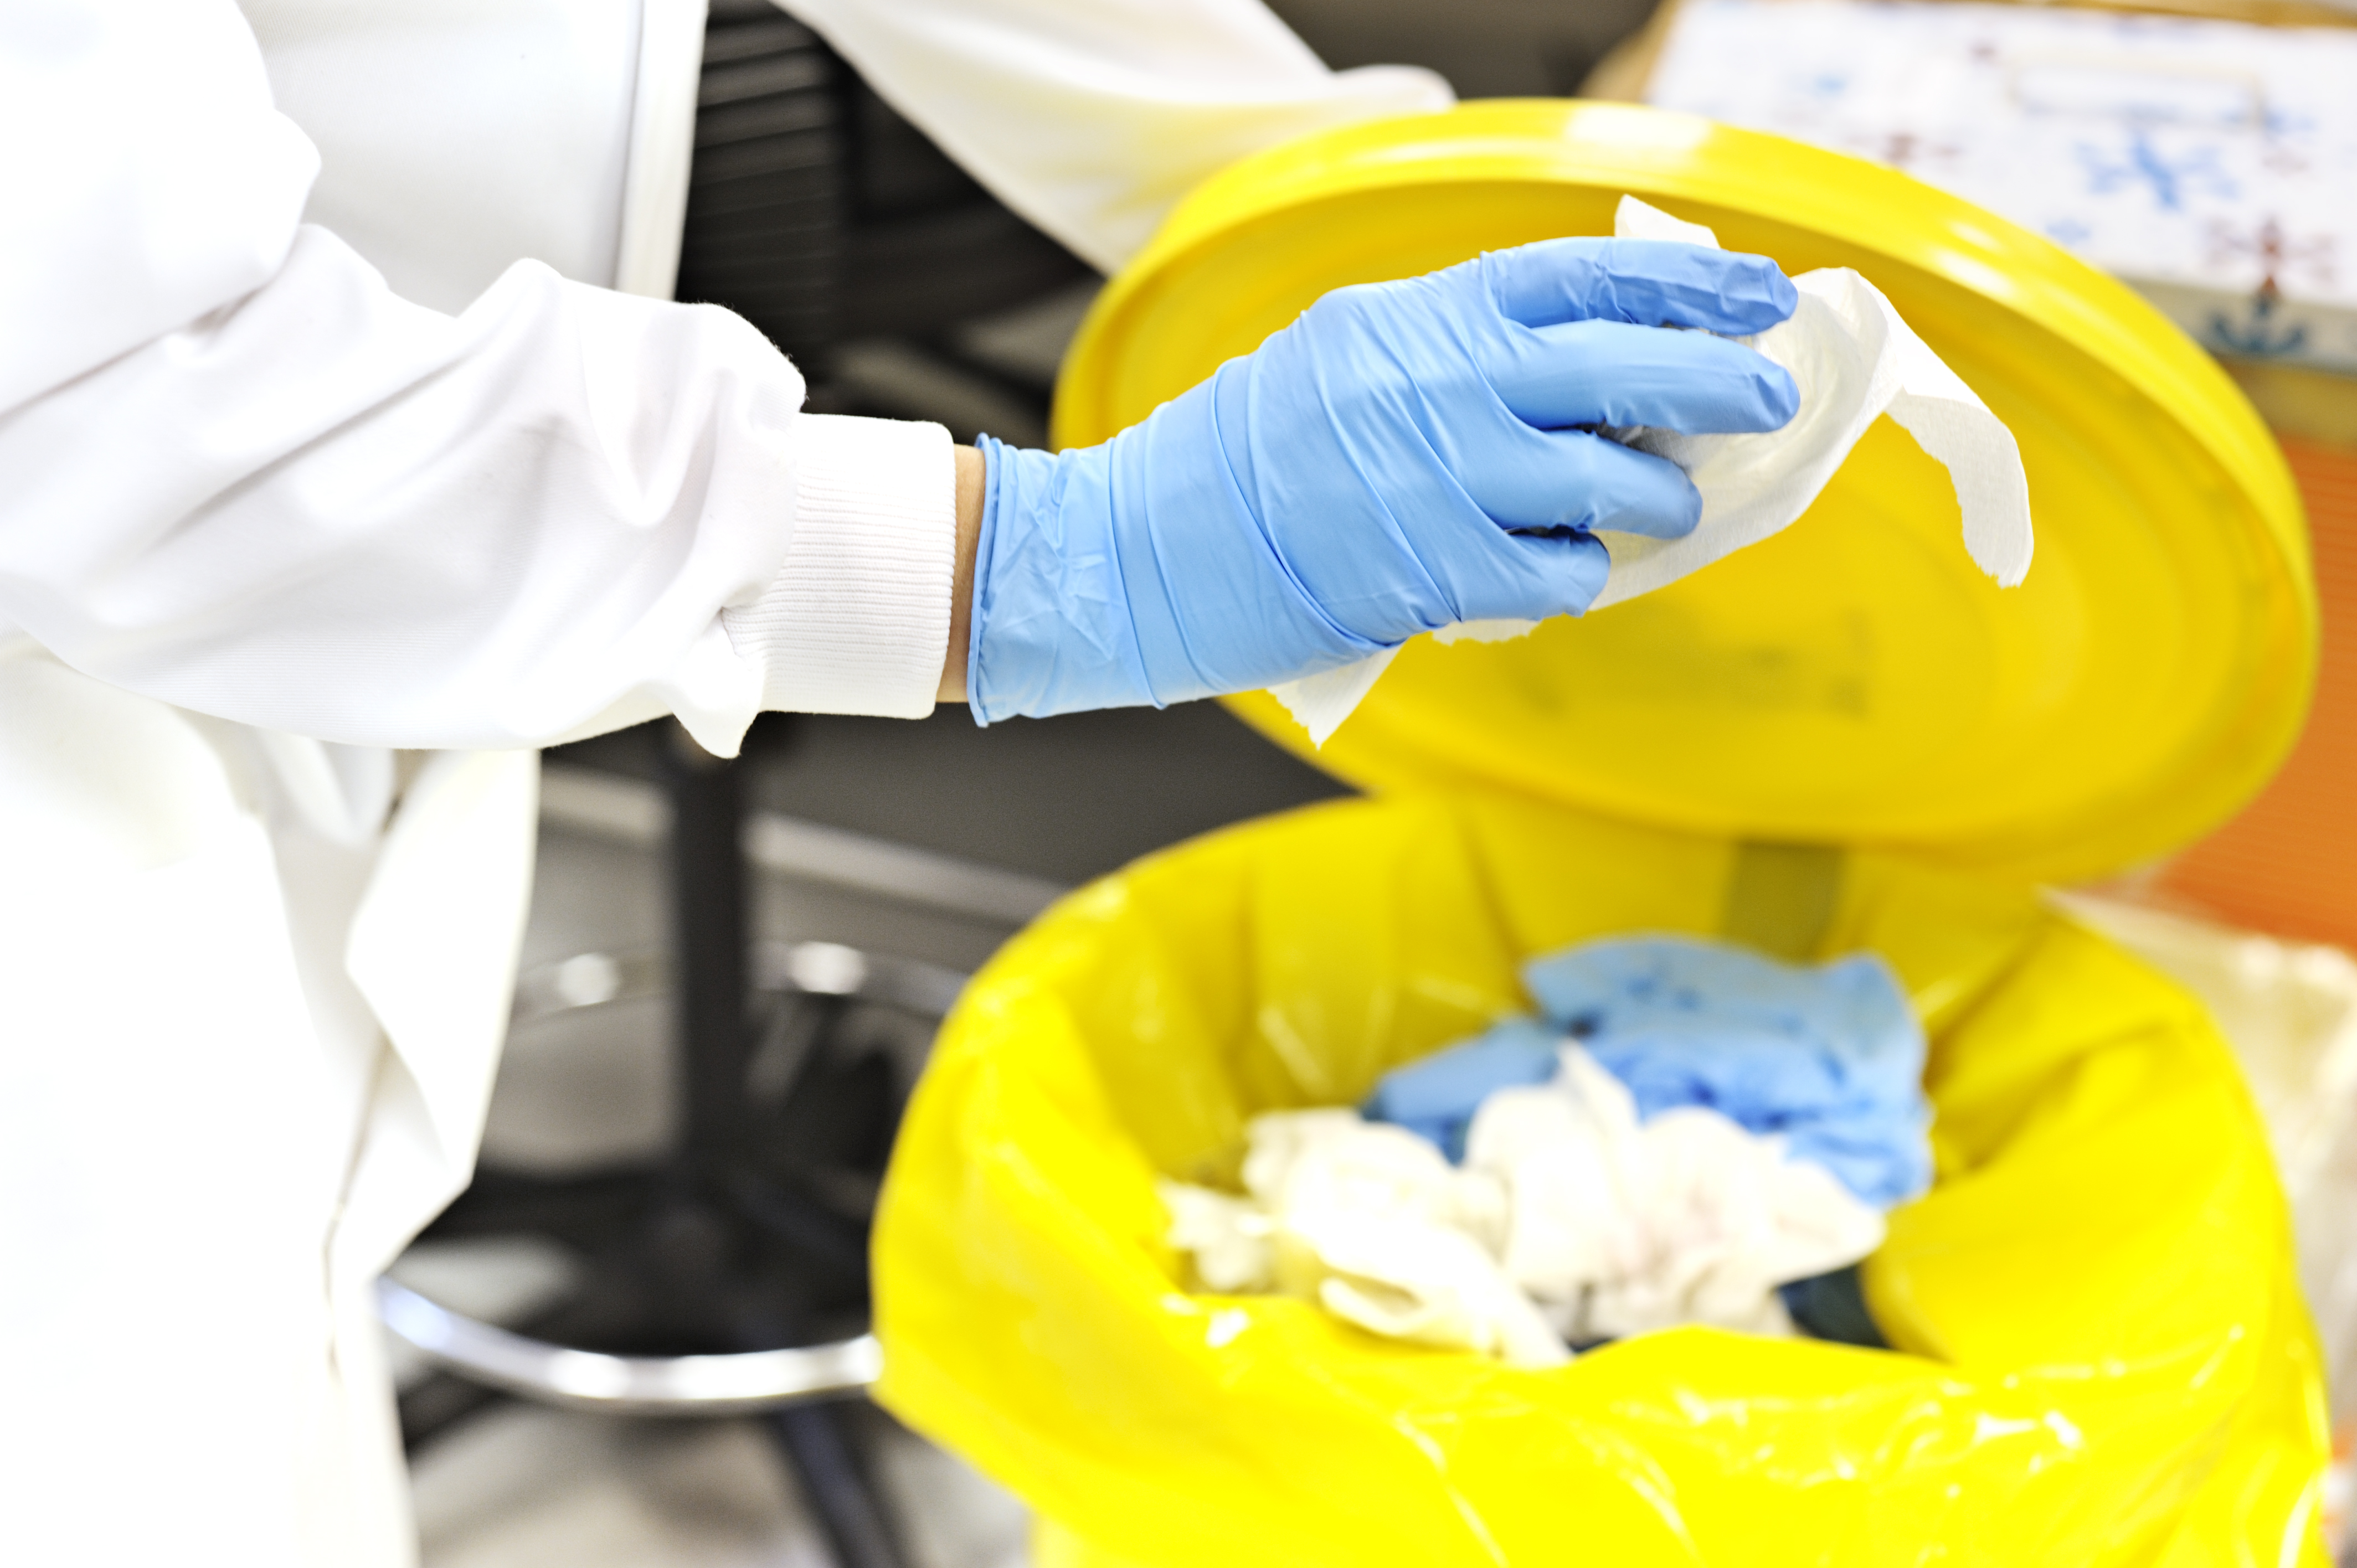 Preparing Medical Waste: What Goes in the Blue Bin